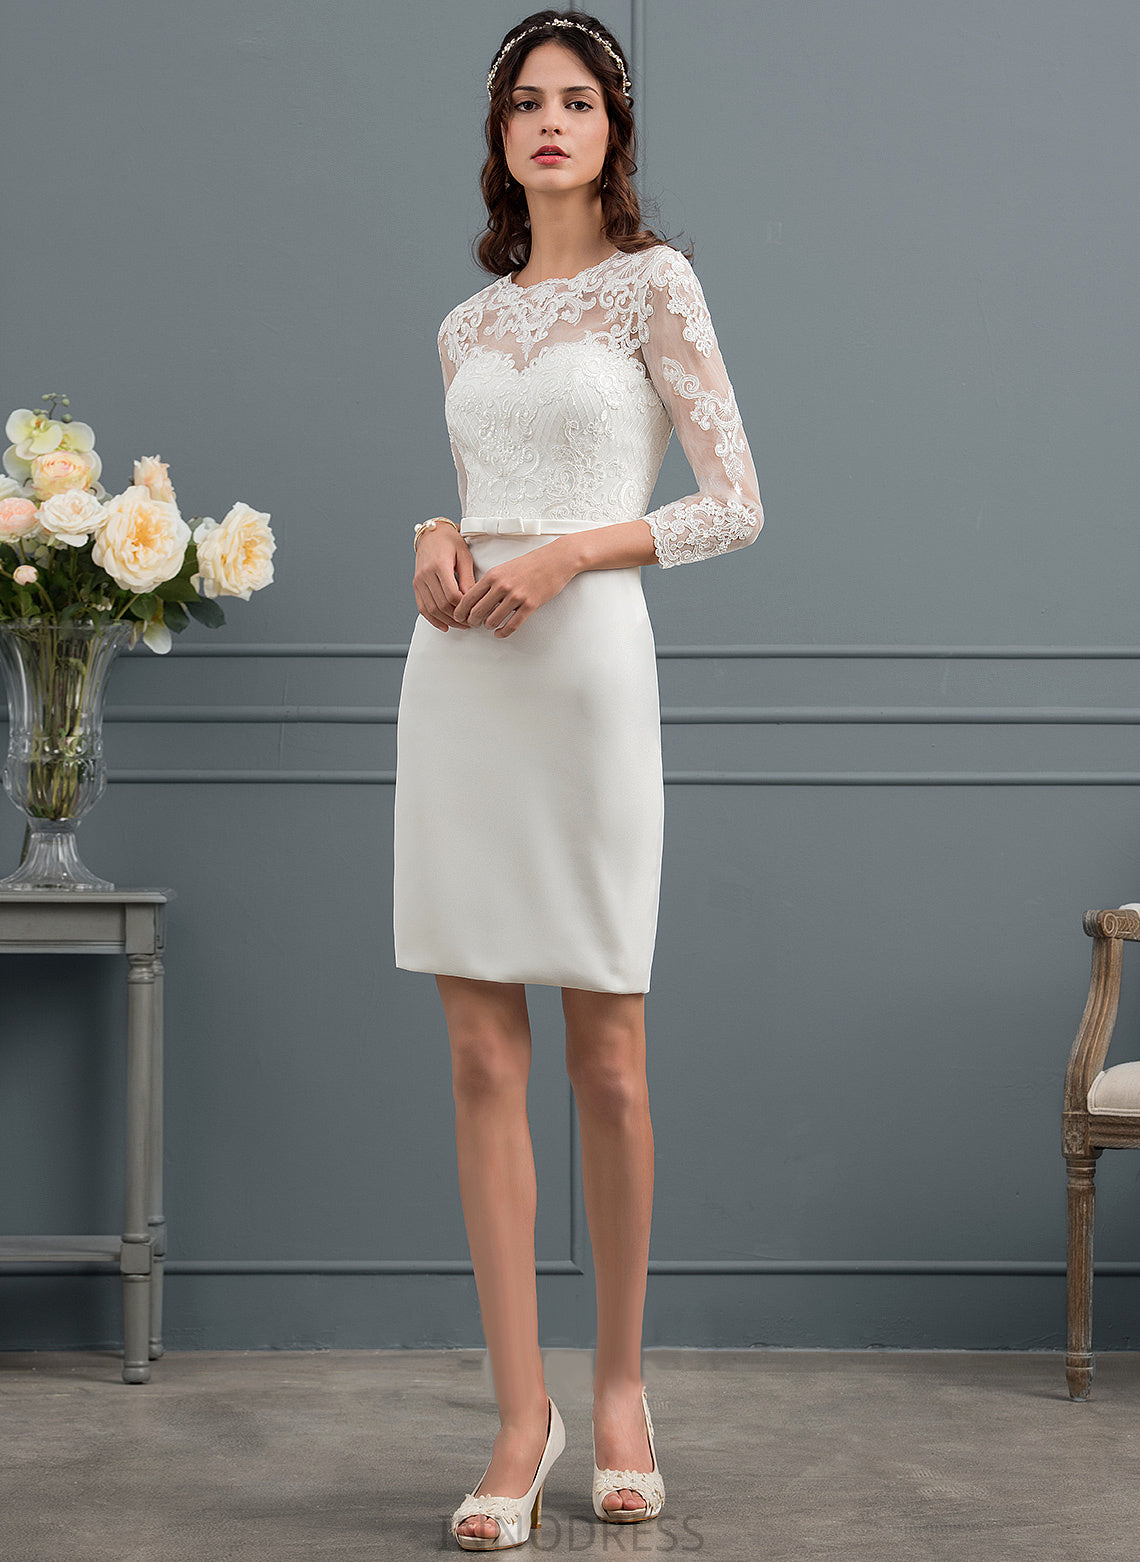 Illusion Sequins Wedding Dresses Bow(s) Tania Knee-Length Lace With Wedding Dress Sheath/Column